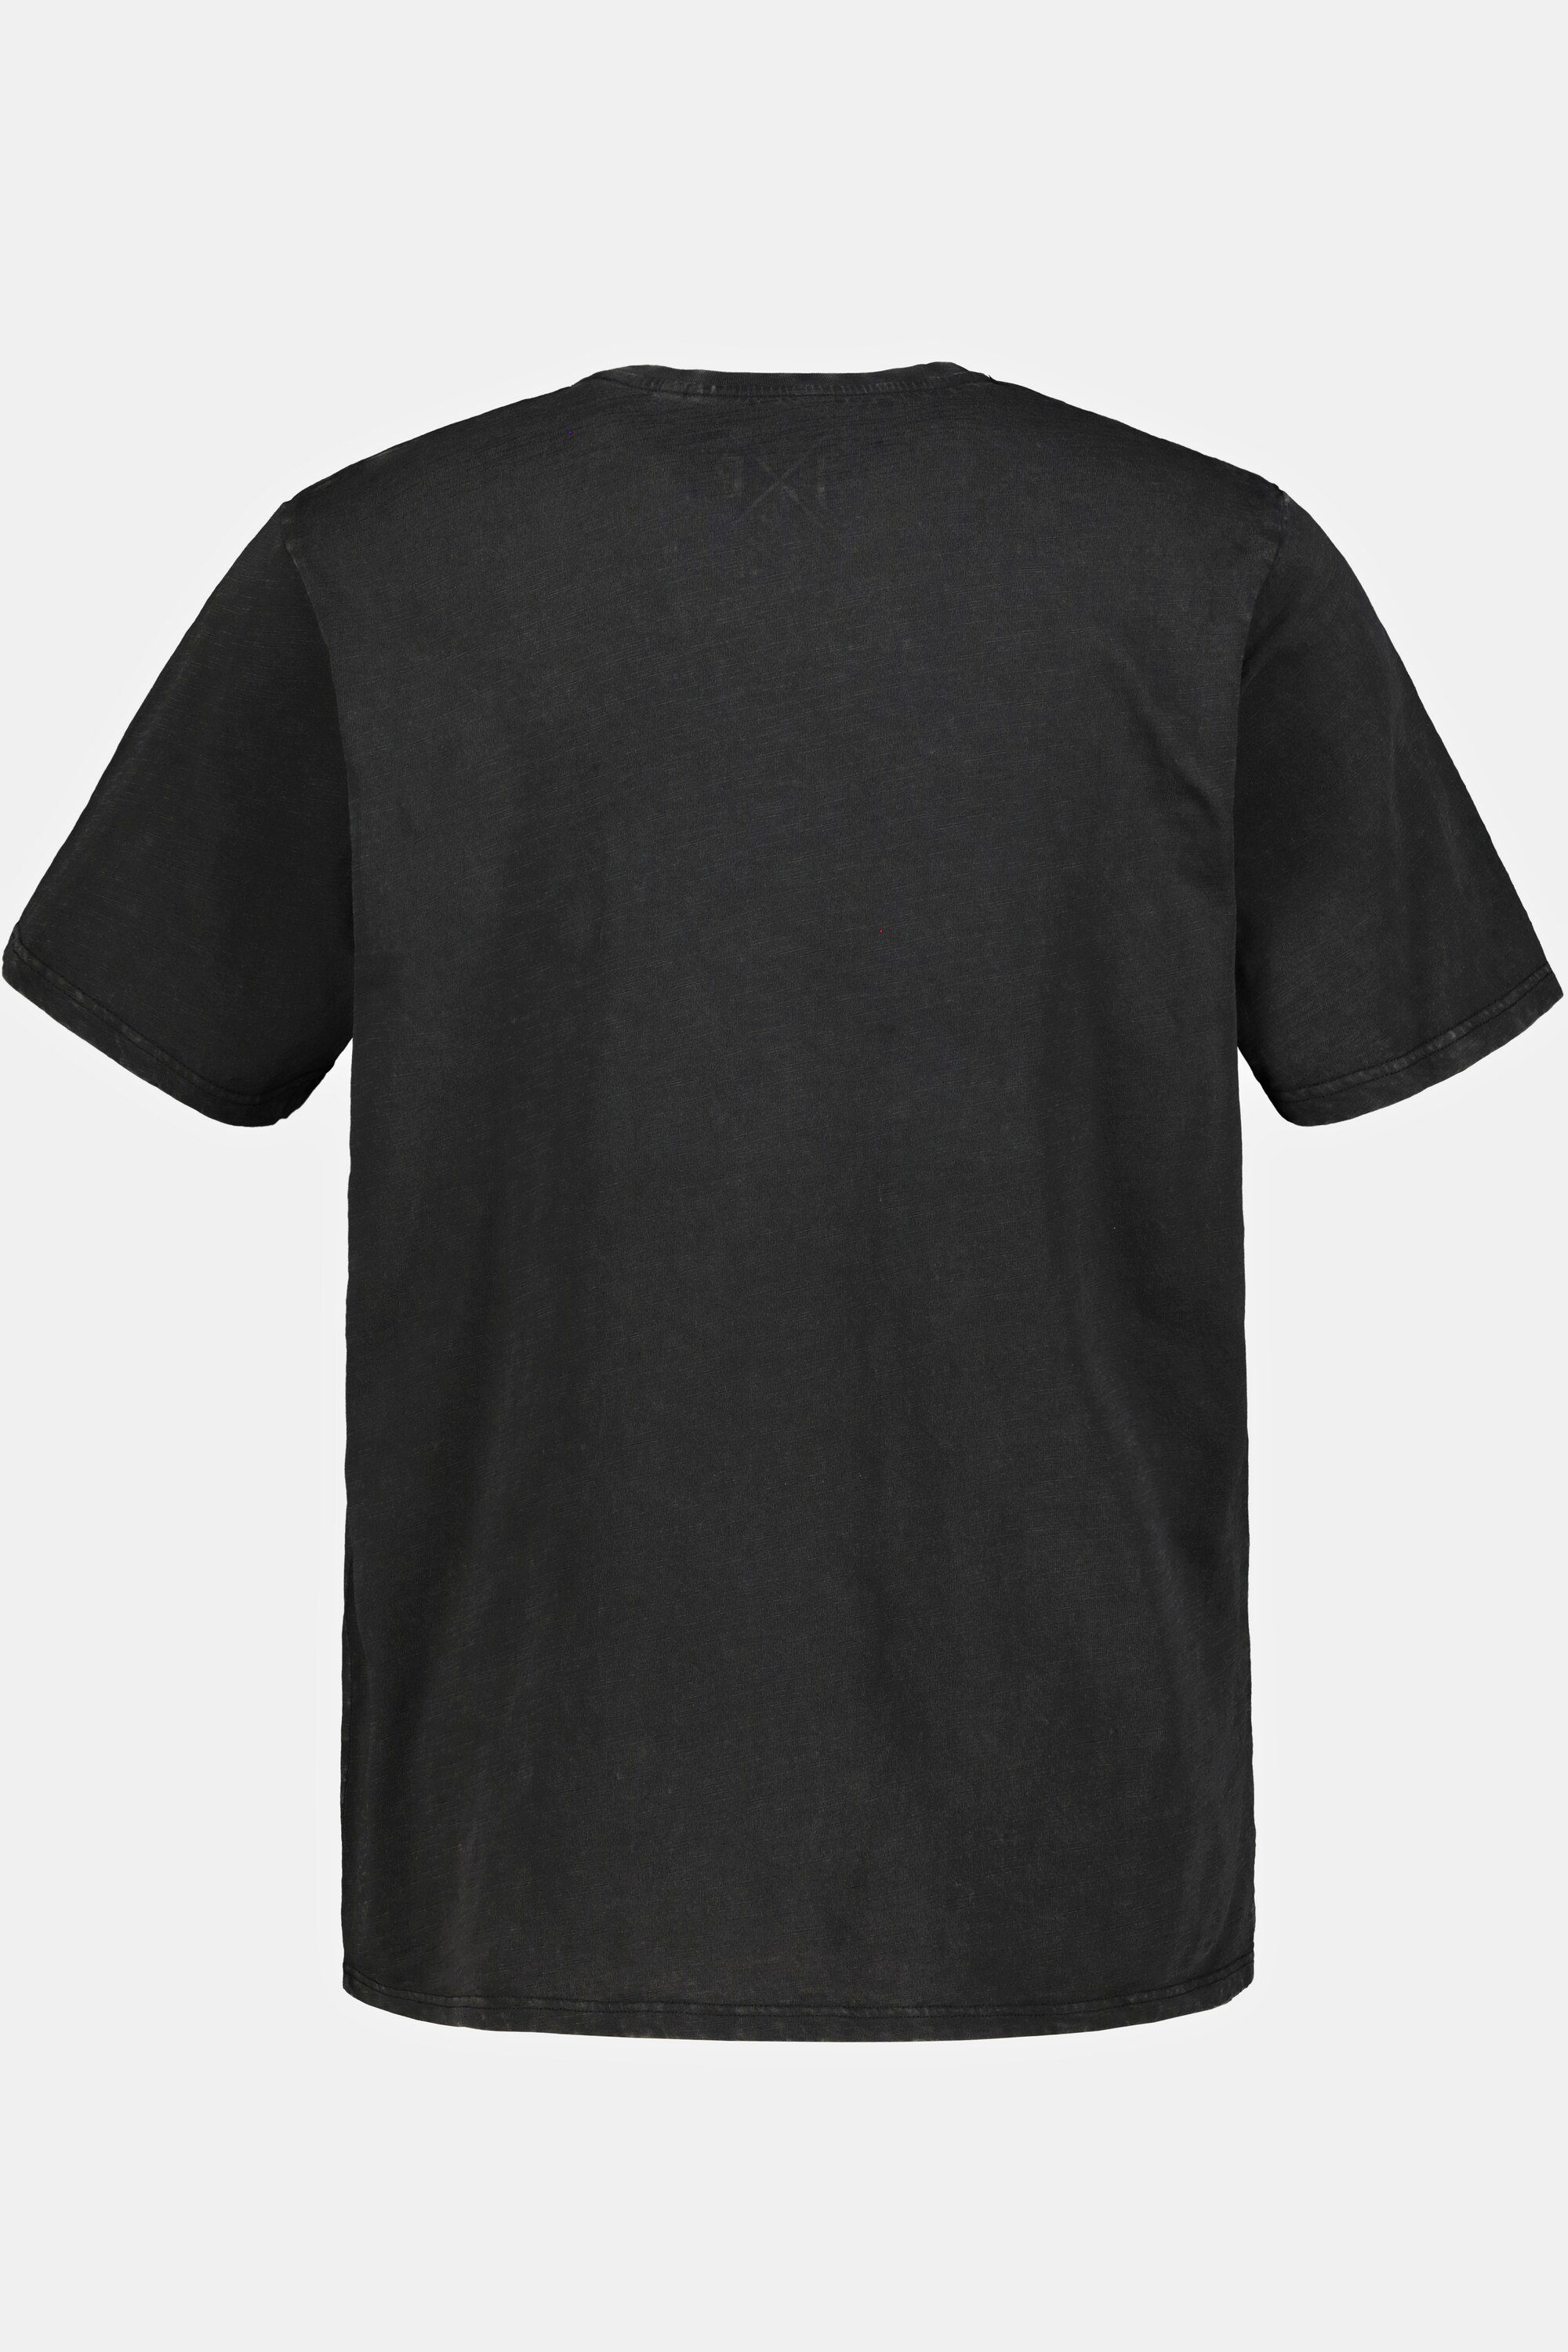 JP1880 T-Shirt Halbarm Flammjersey schwarz Vintage T-Shirt Look